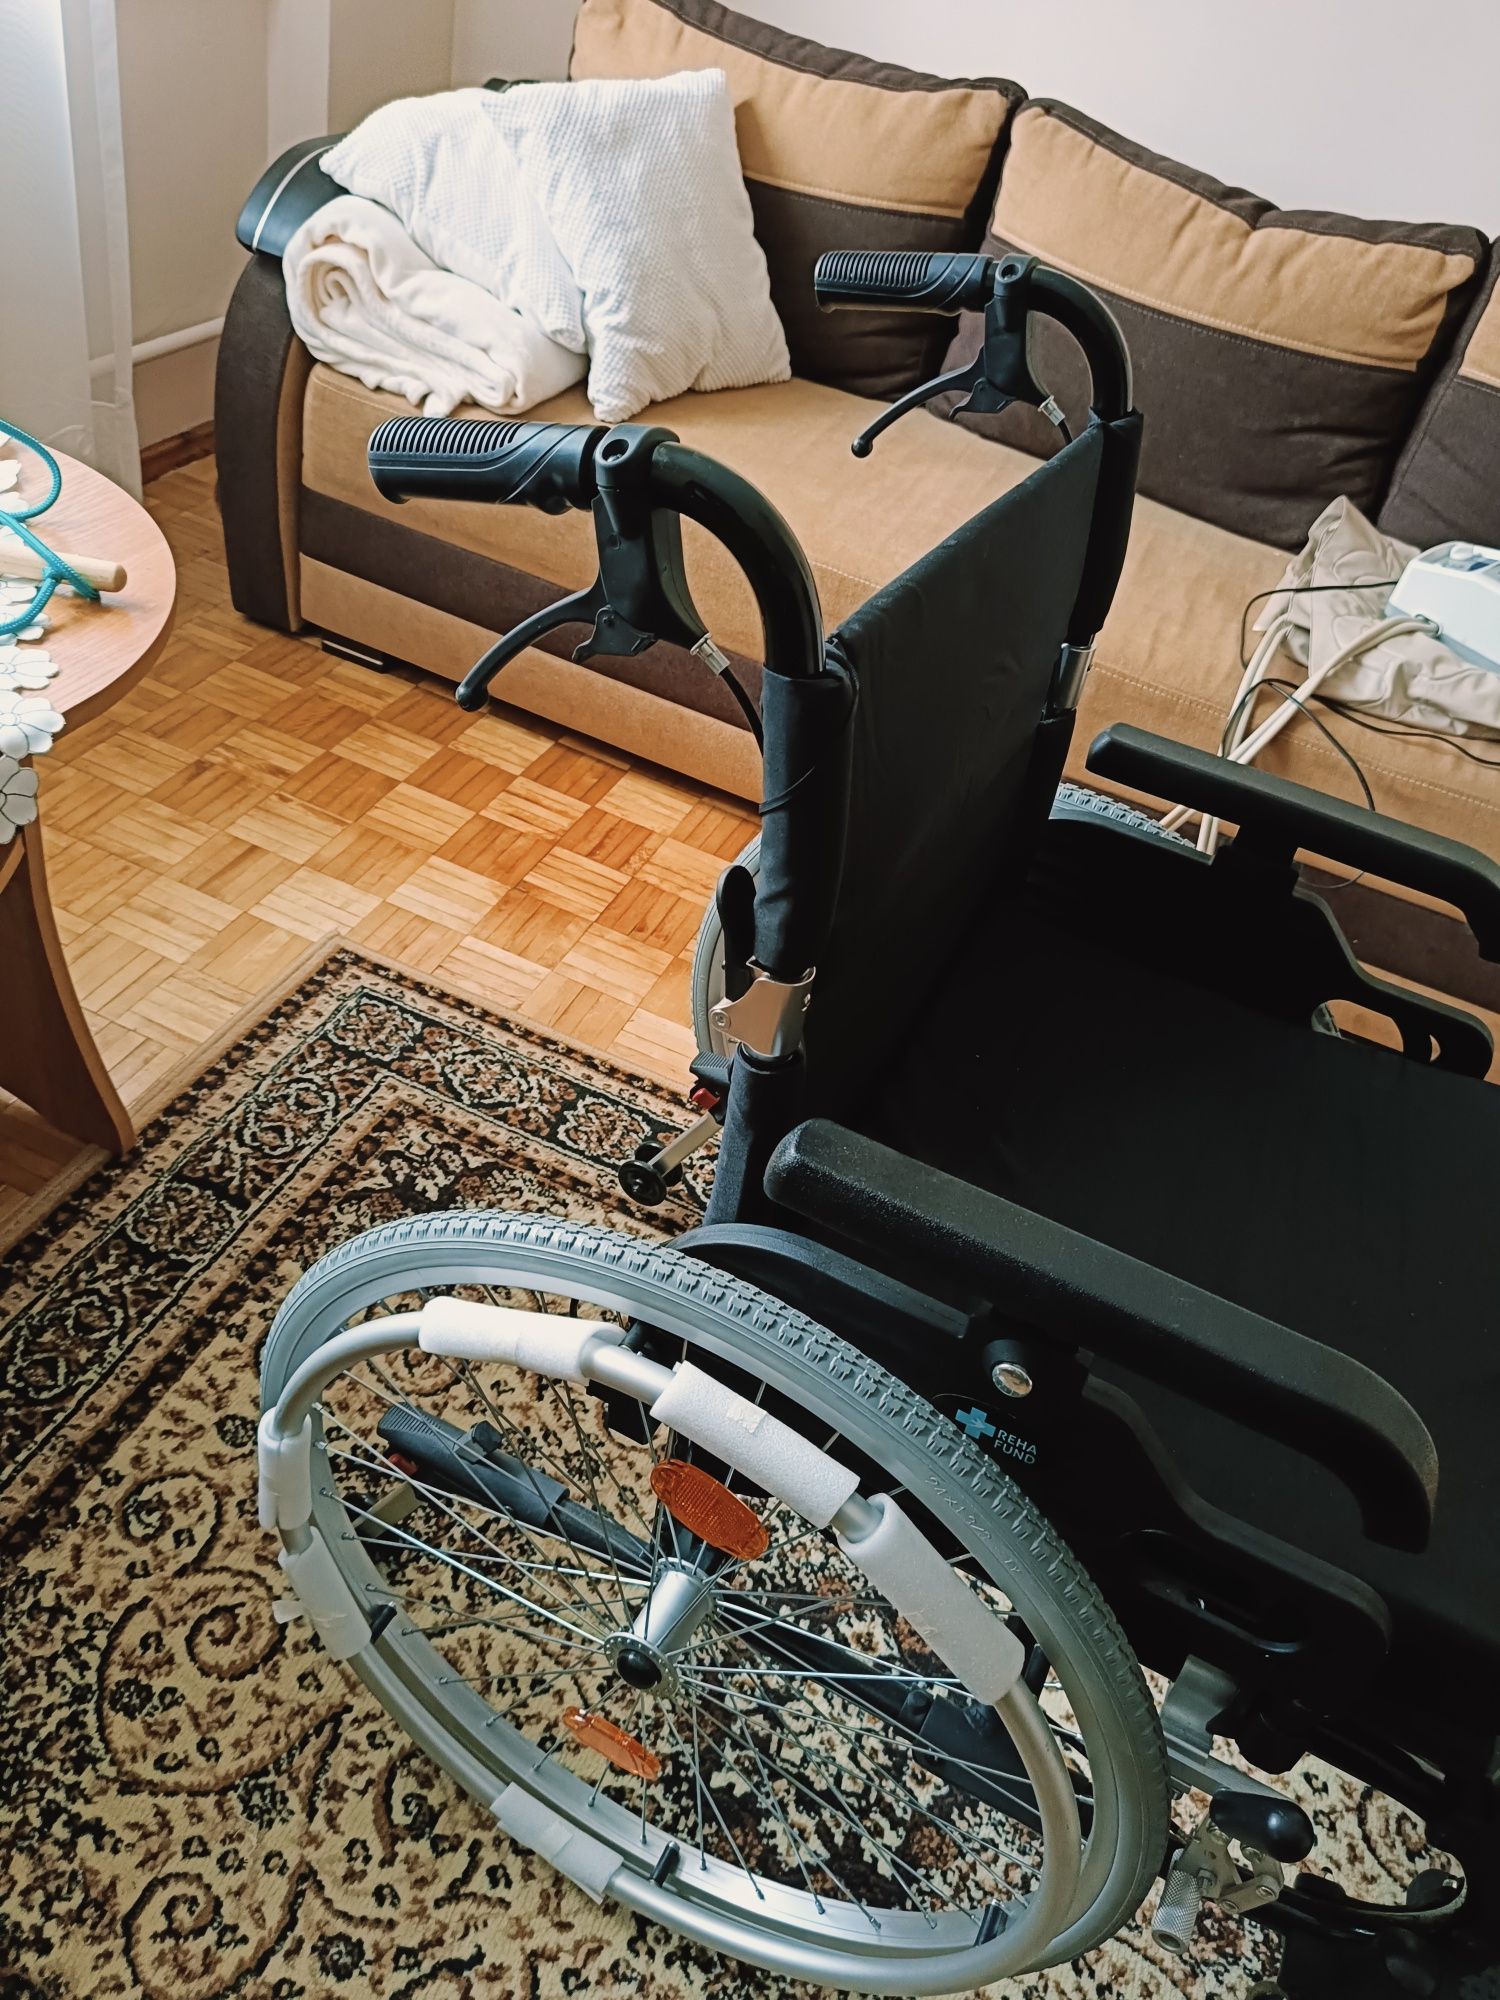 Lekki wózek inwalidzki